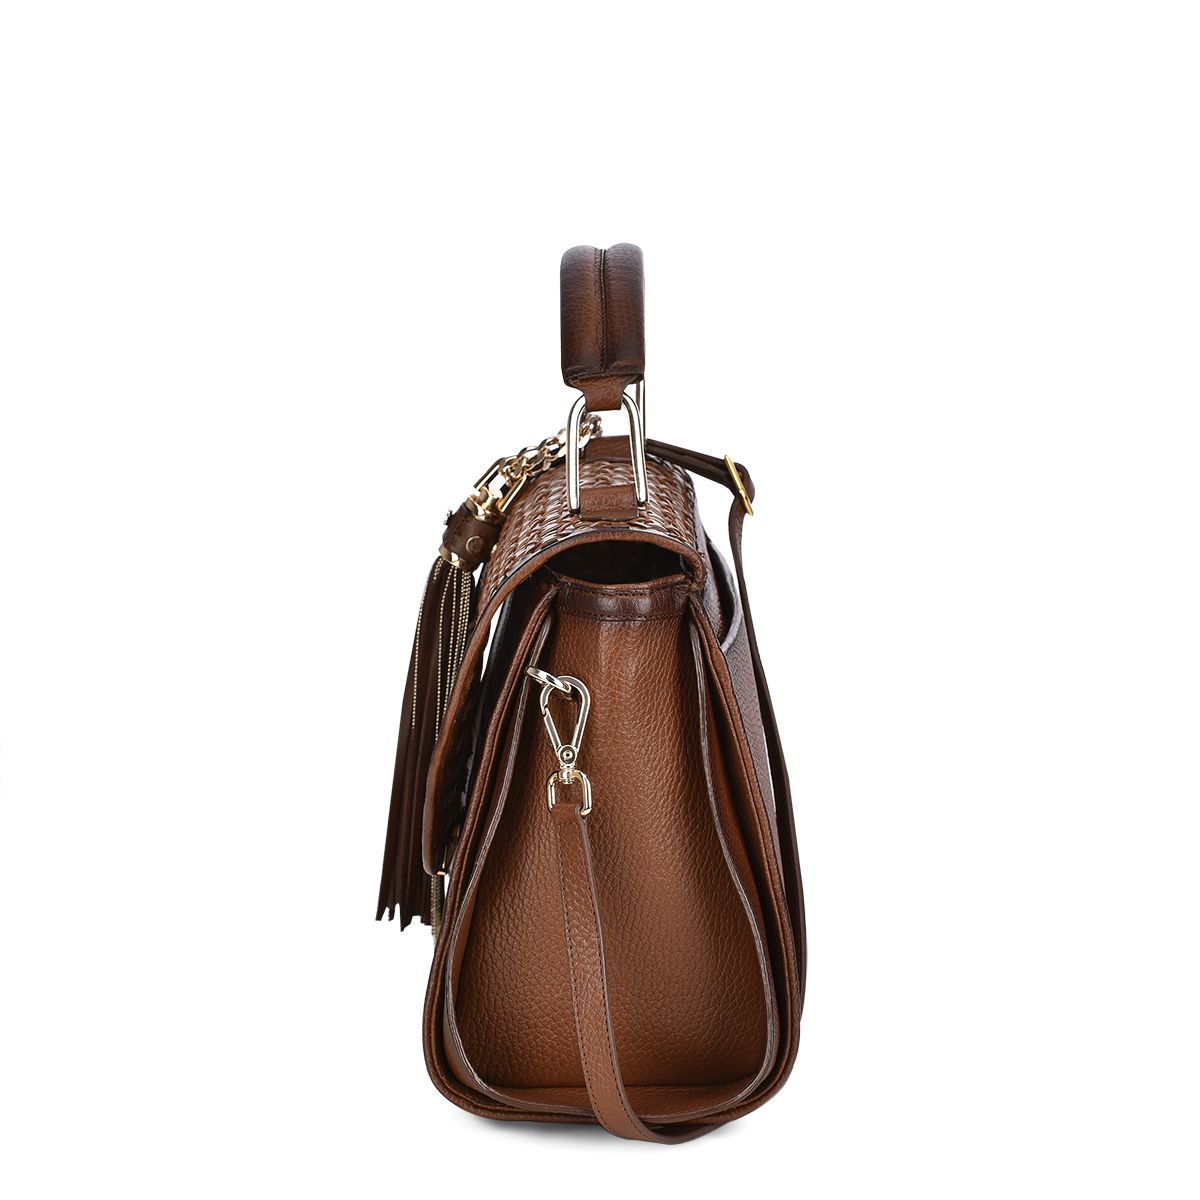 Honey leather handcrafted Interweaving handbag